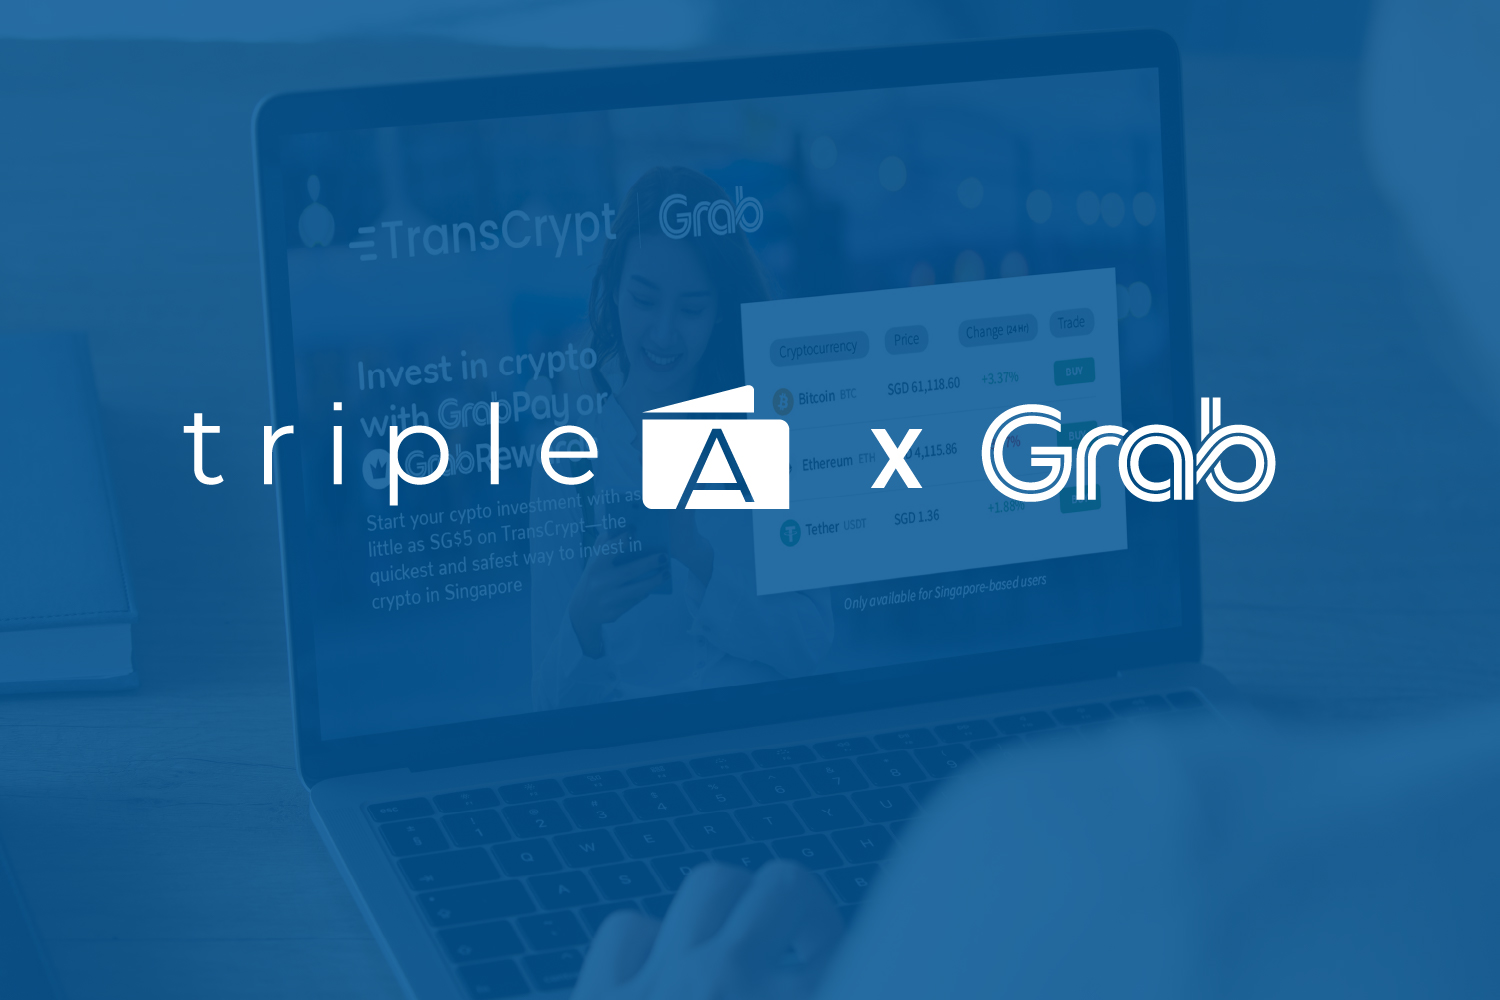 TripleA partners grab to enable digital currencies trading using GrabPay